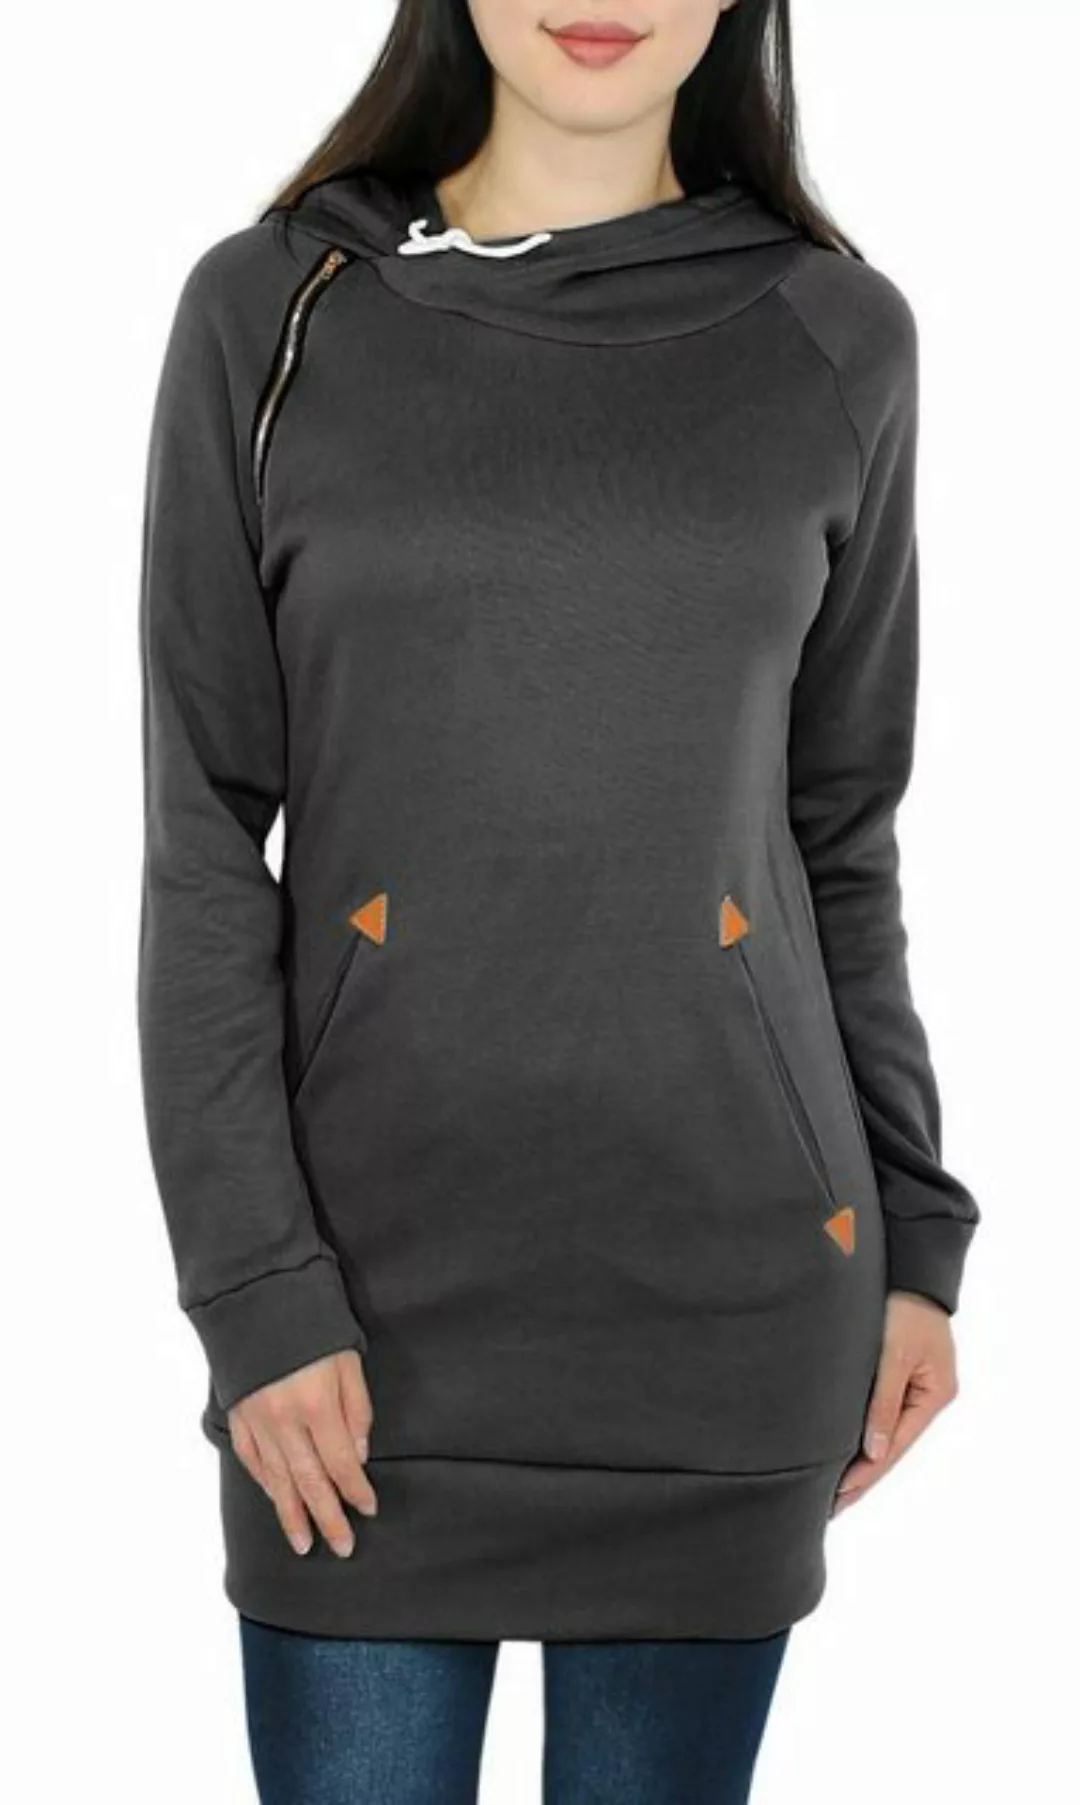 dy_mode Longsweatshirt Damen Kapuzenpullover Sweatshirt Lang Hoodie Longshi günstig online kaufen